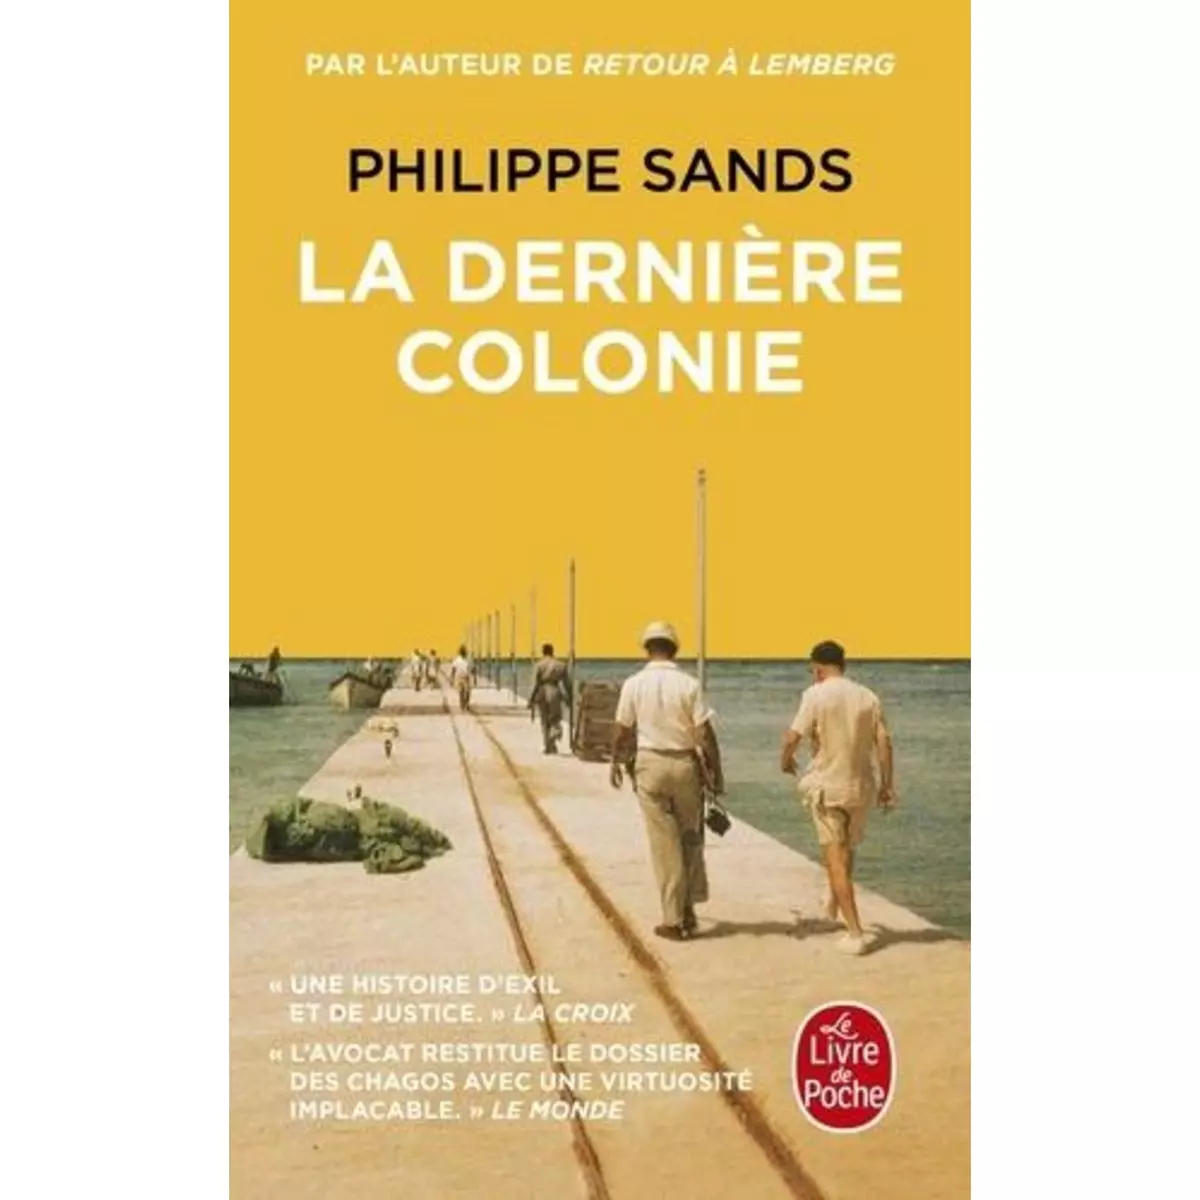  LA DERNIERE COLONIE, Sands Philippe